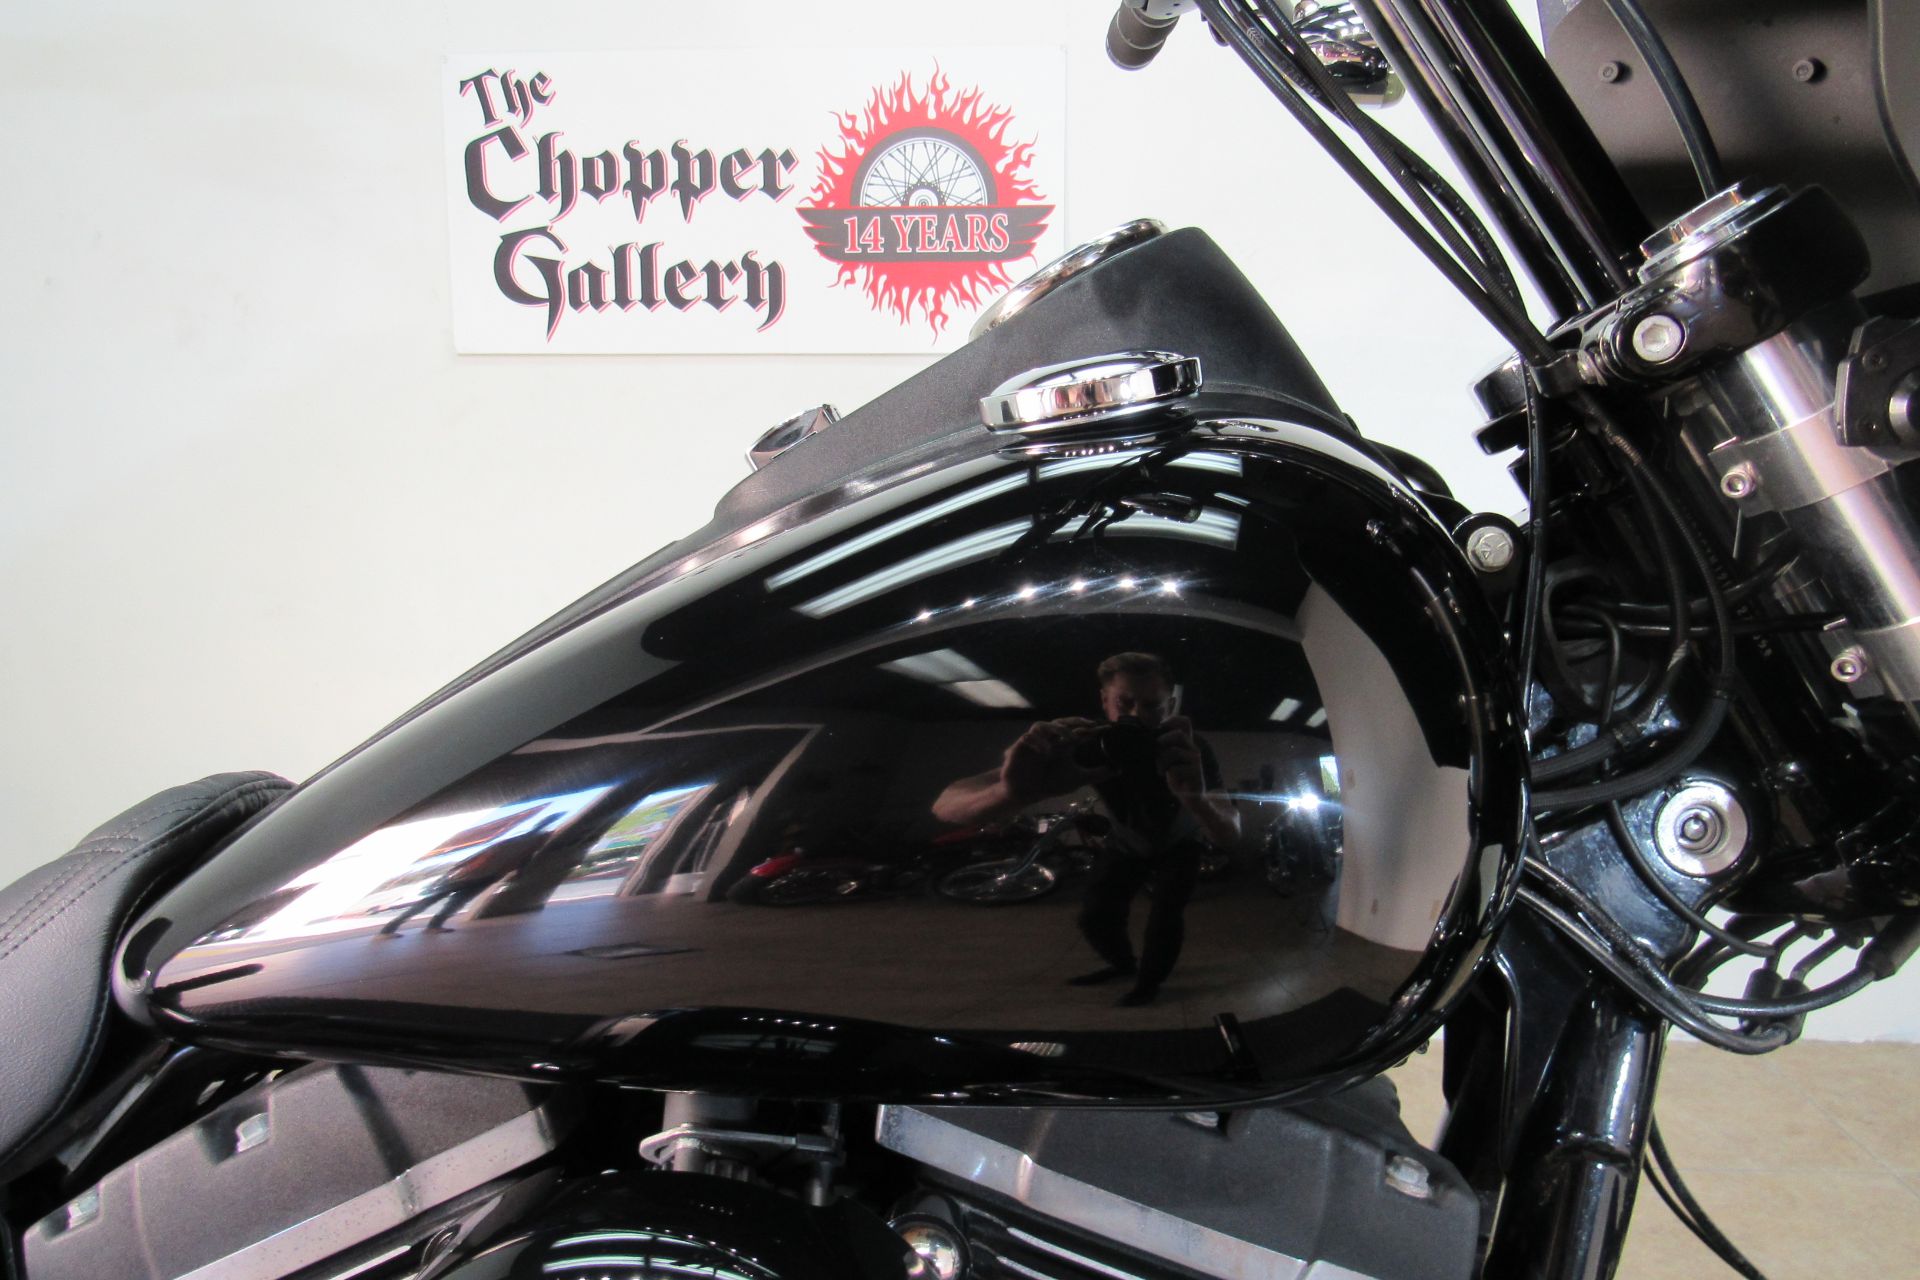 2015 Harley-Davidson Street Bob® in Temecula, California - Photo 7